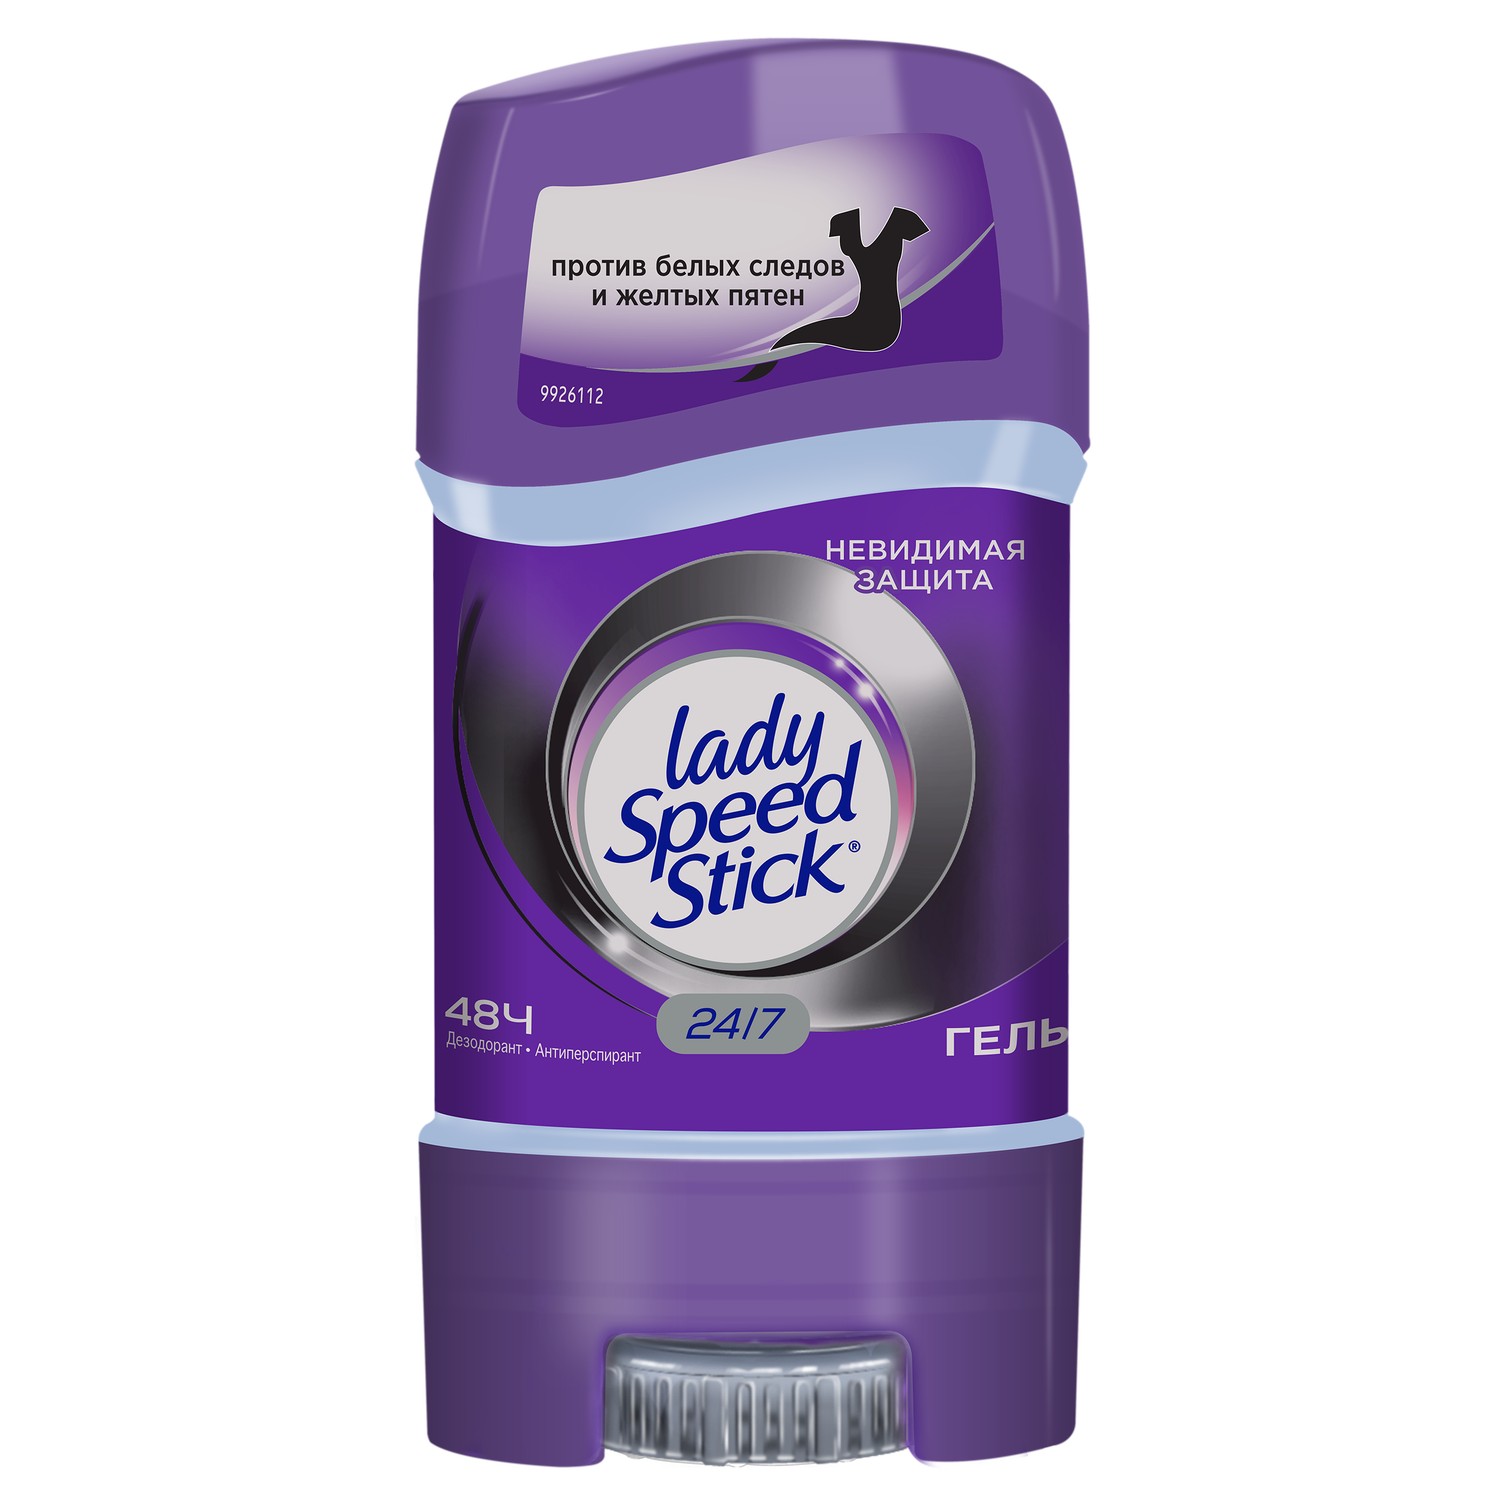 Дезодорант Lady Speed Stick Невидимая защита 65 г